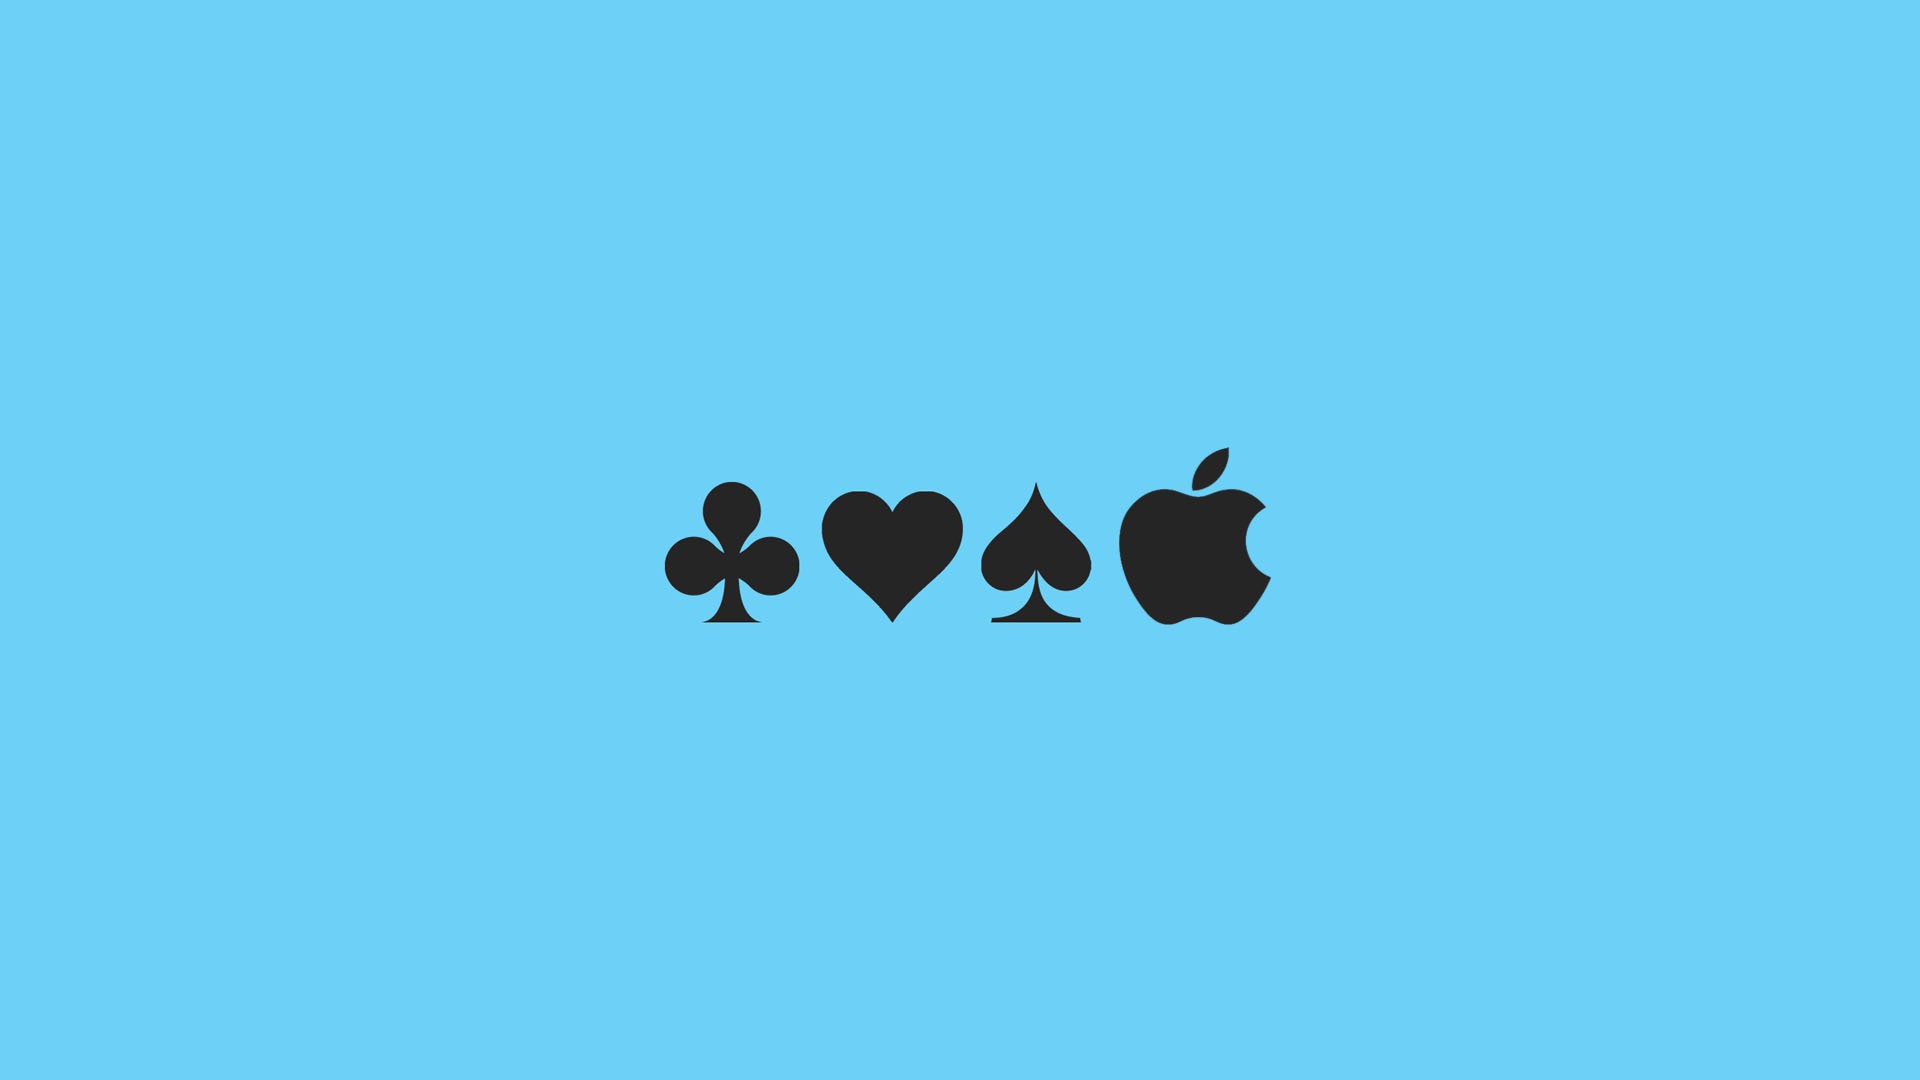 General 1920x1080 aces spades Apple Inc. shamrock cyan cyan background minimalism heart (design) simple background brand